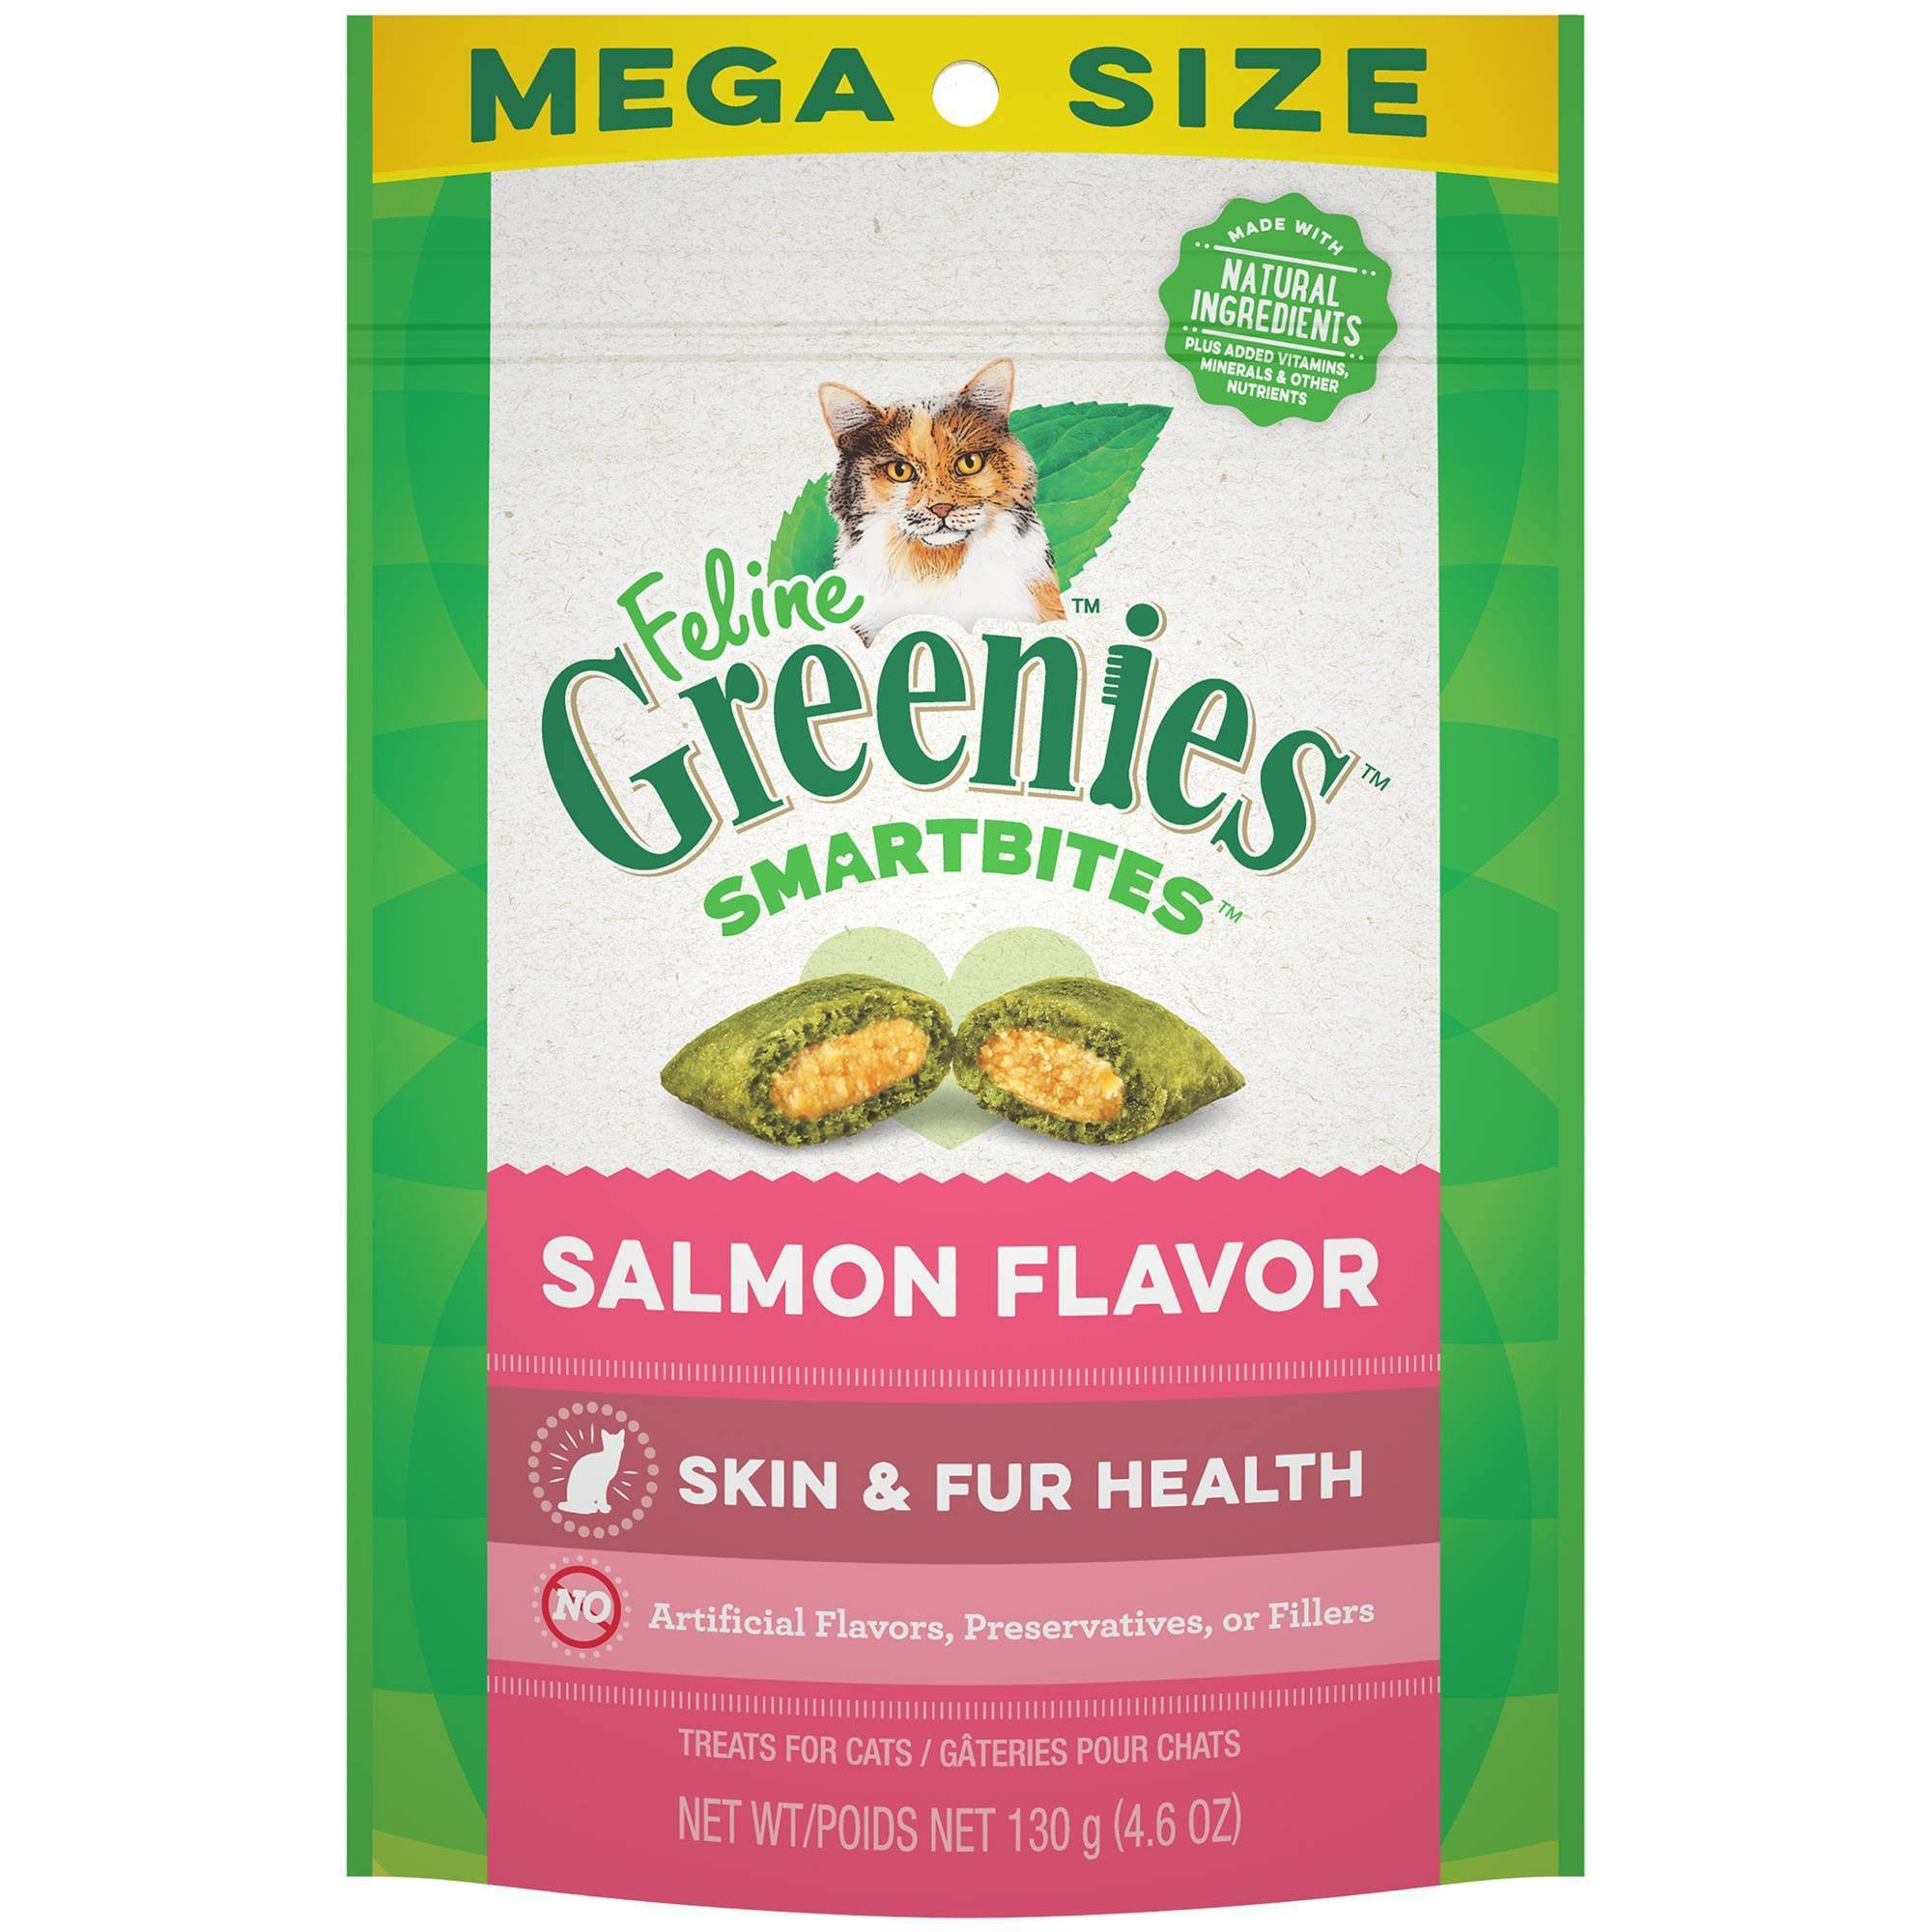 Feline Greenies SmartBites Treats for Cats, Salmon Flavor, Mega Size - 130 g